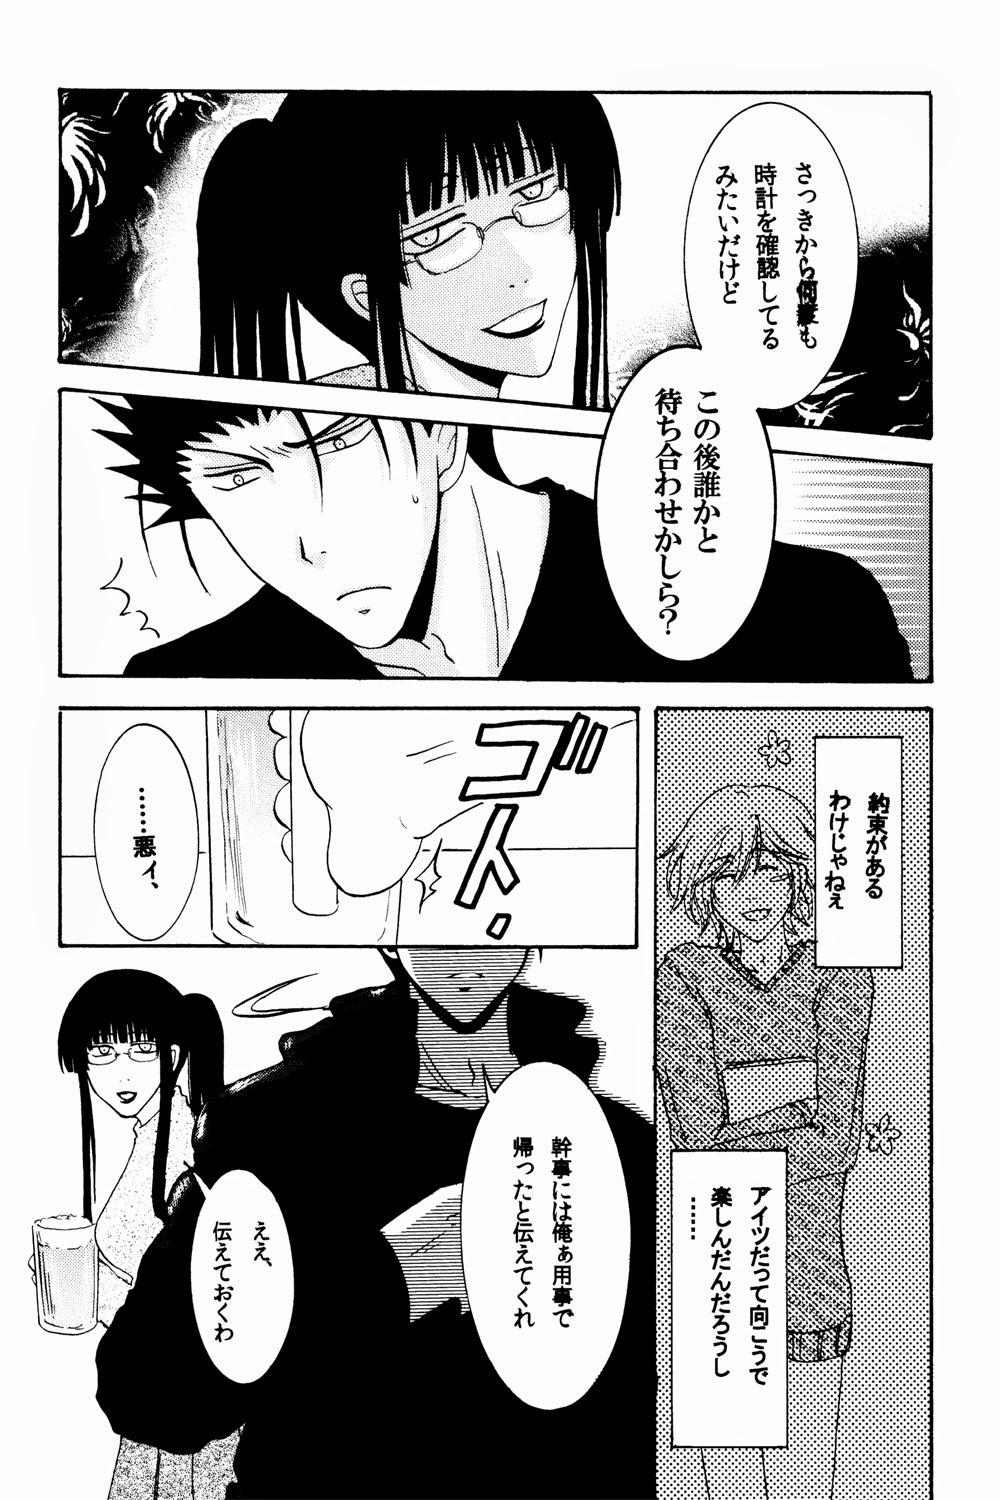 Massage Creep New Year wa Kimi no Bed de. - Tsubasa reservoir chronicle From - Page 8